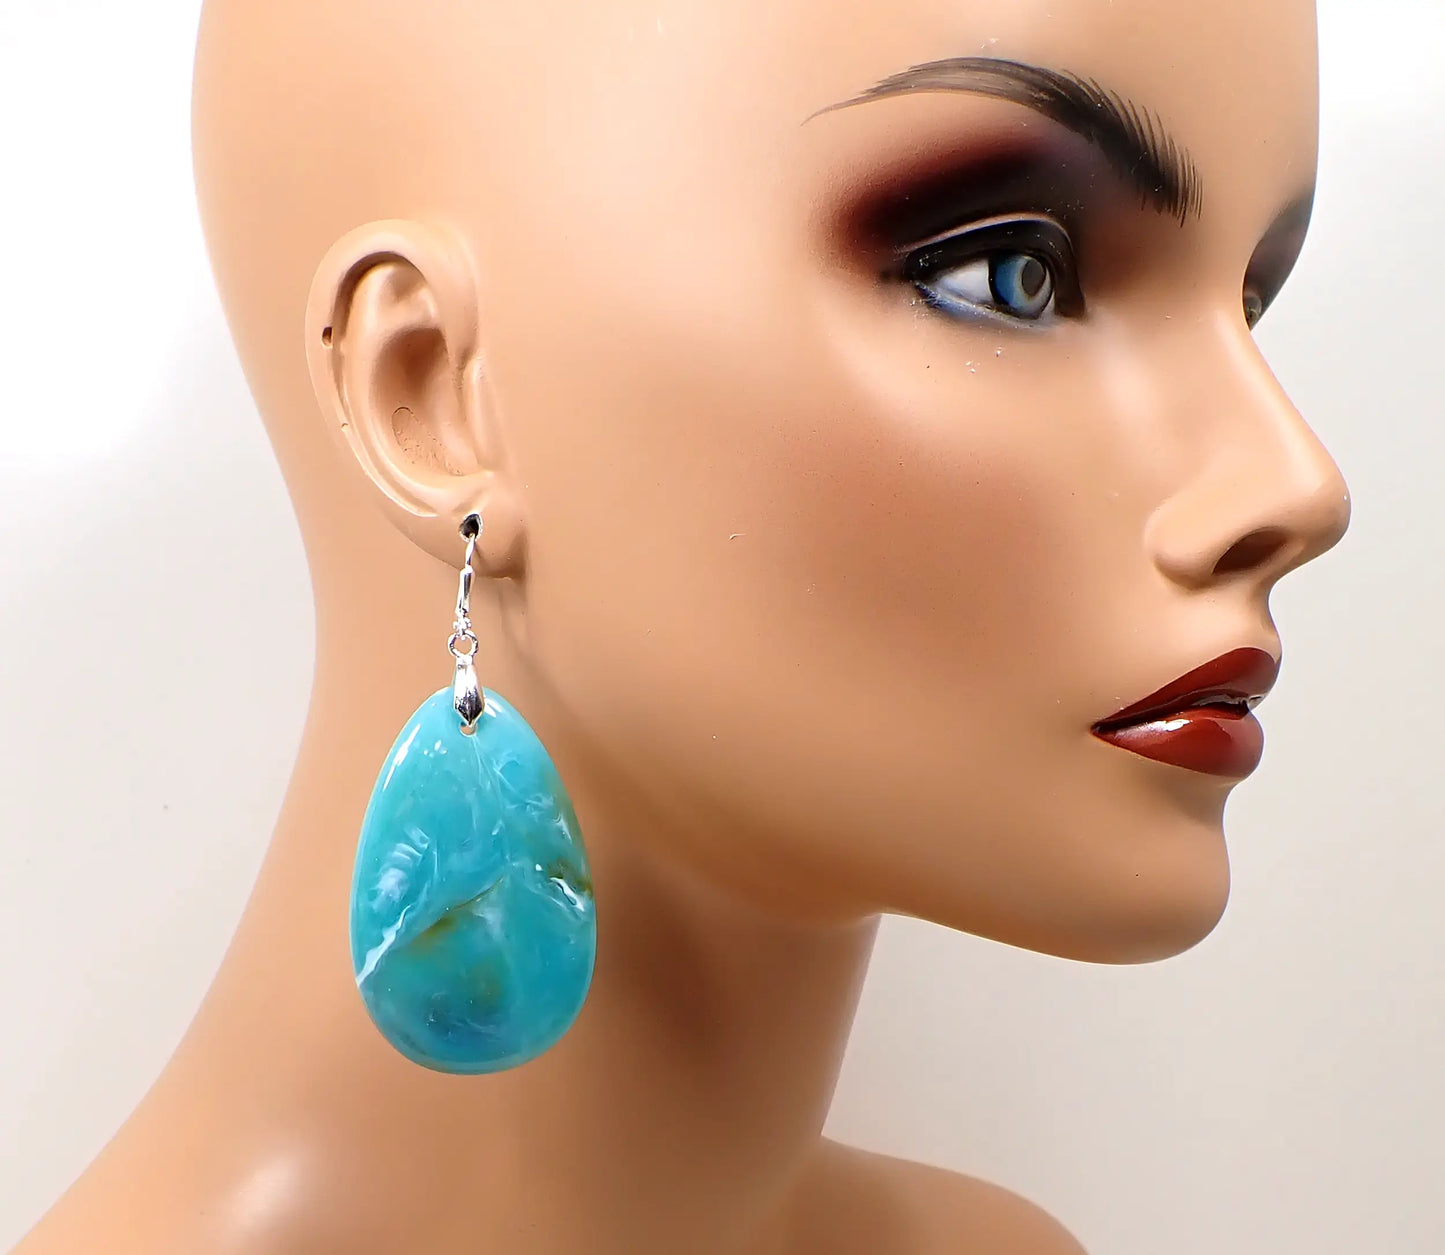 Big Heavy Marbled Aqua Blue Acrylic Teardrop Handmade Earrings, Maximalist Jewelry, Silver Plated Hook Lever Back or Clip On